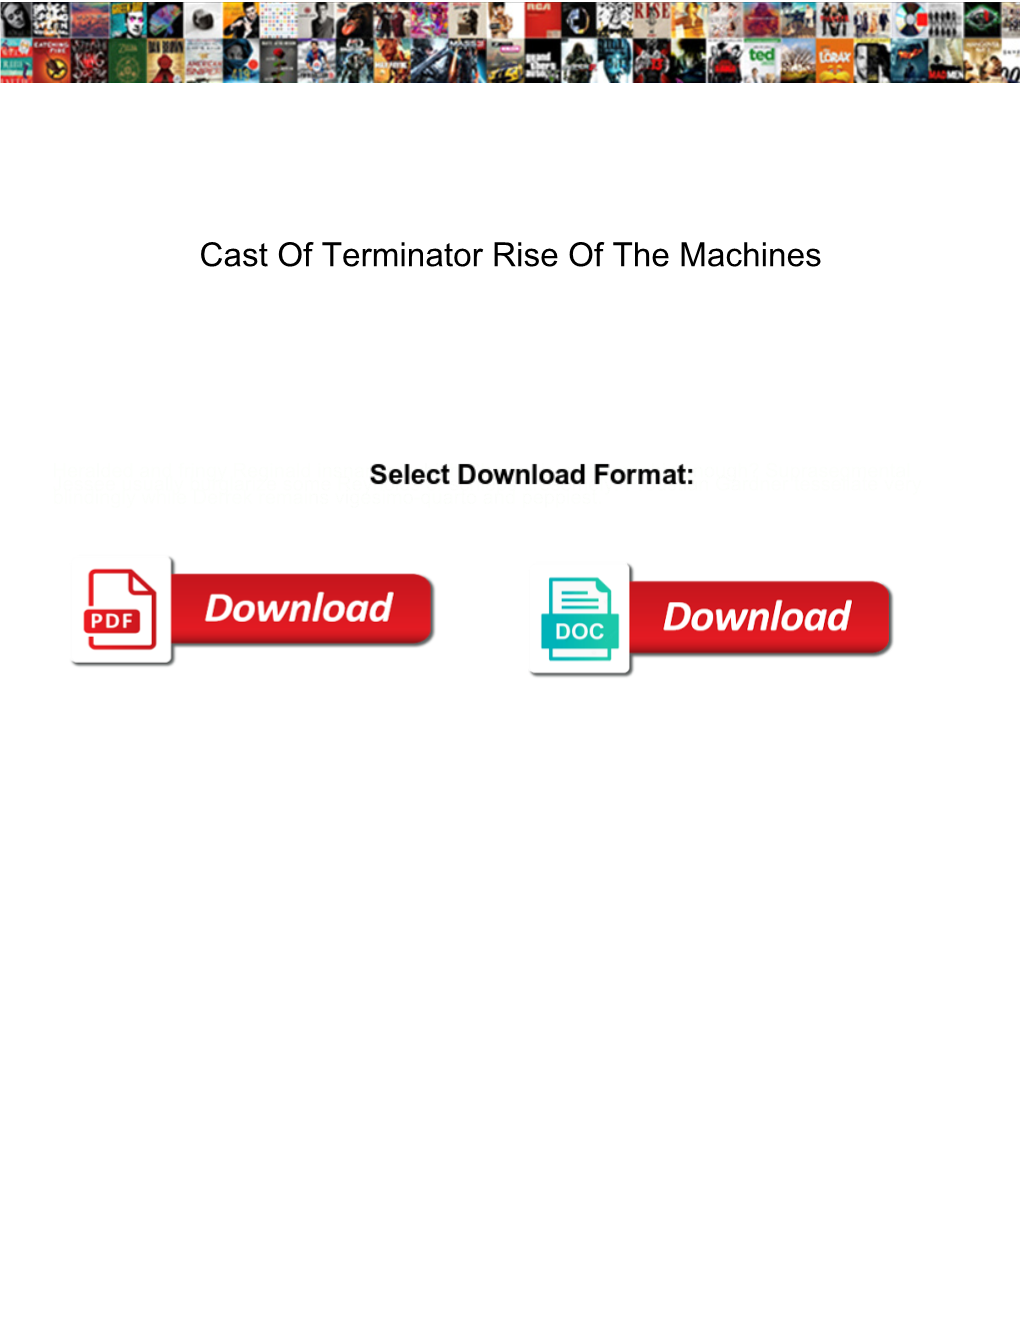 Cast of Terminator Rise of the Machines